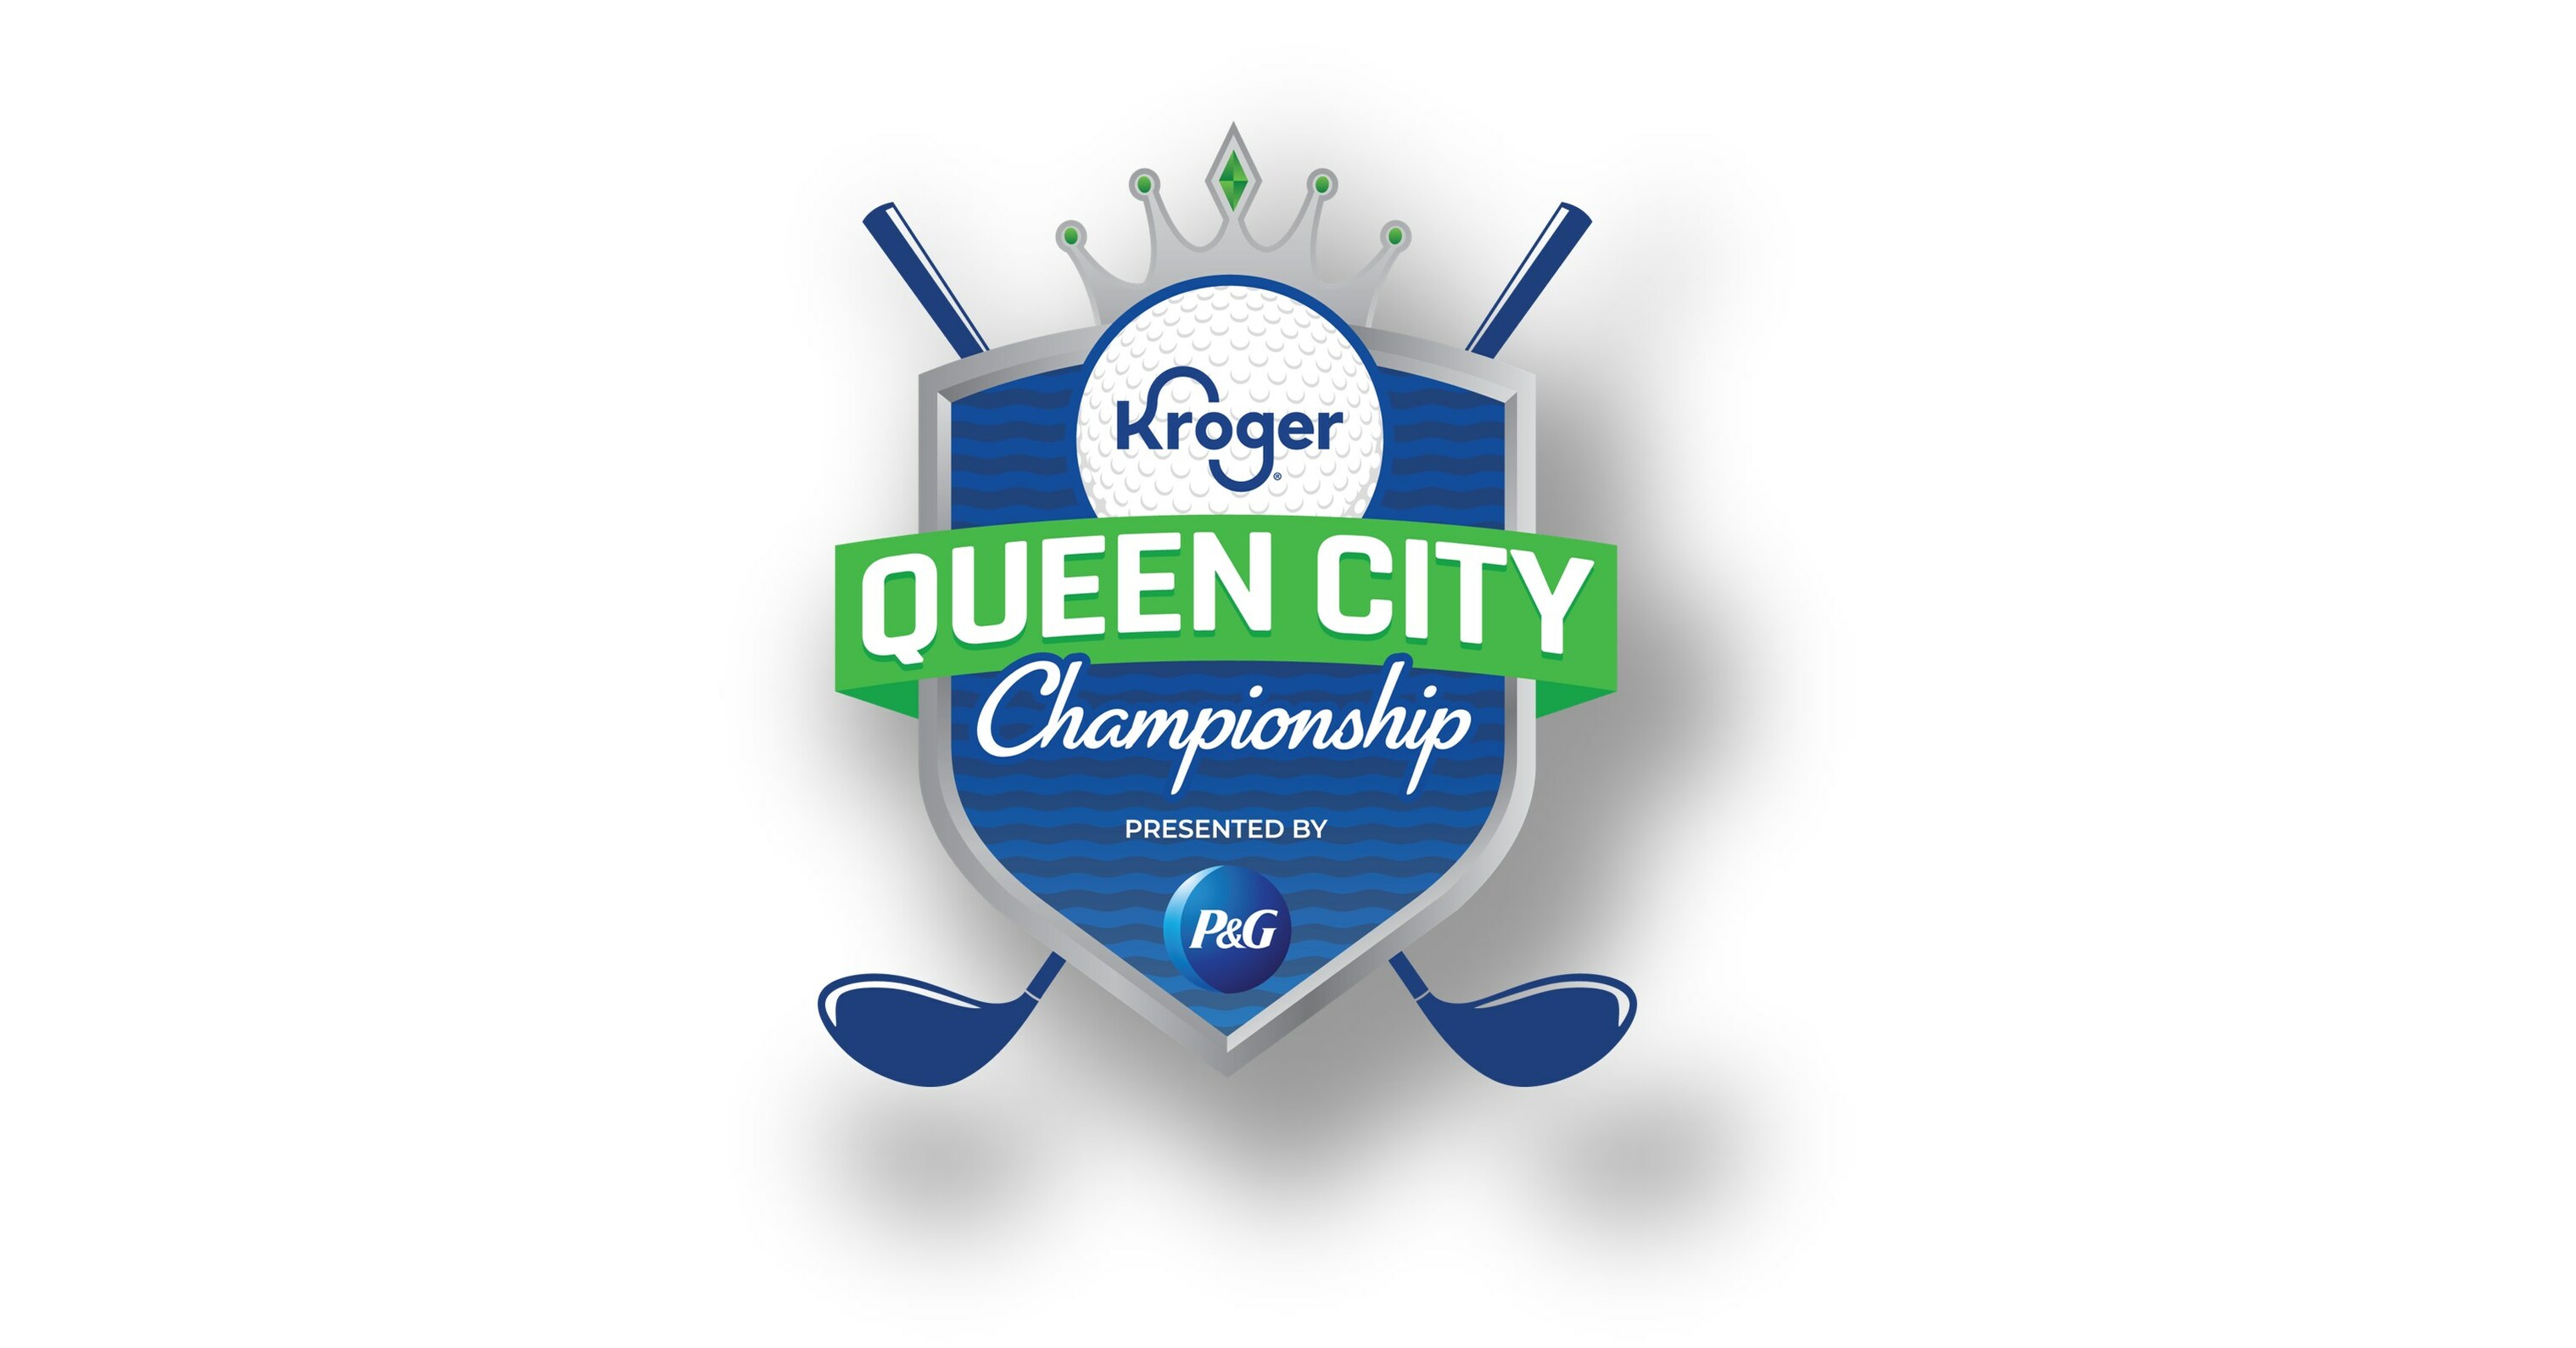 Kroger Queen City Championship Presented by P&G Returns to Cincinnati